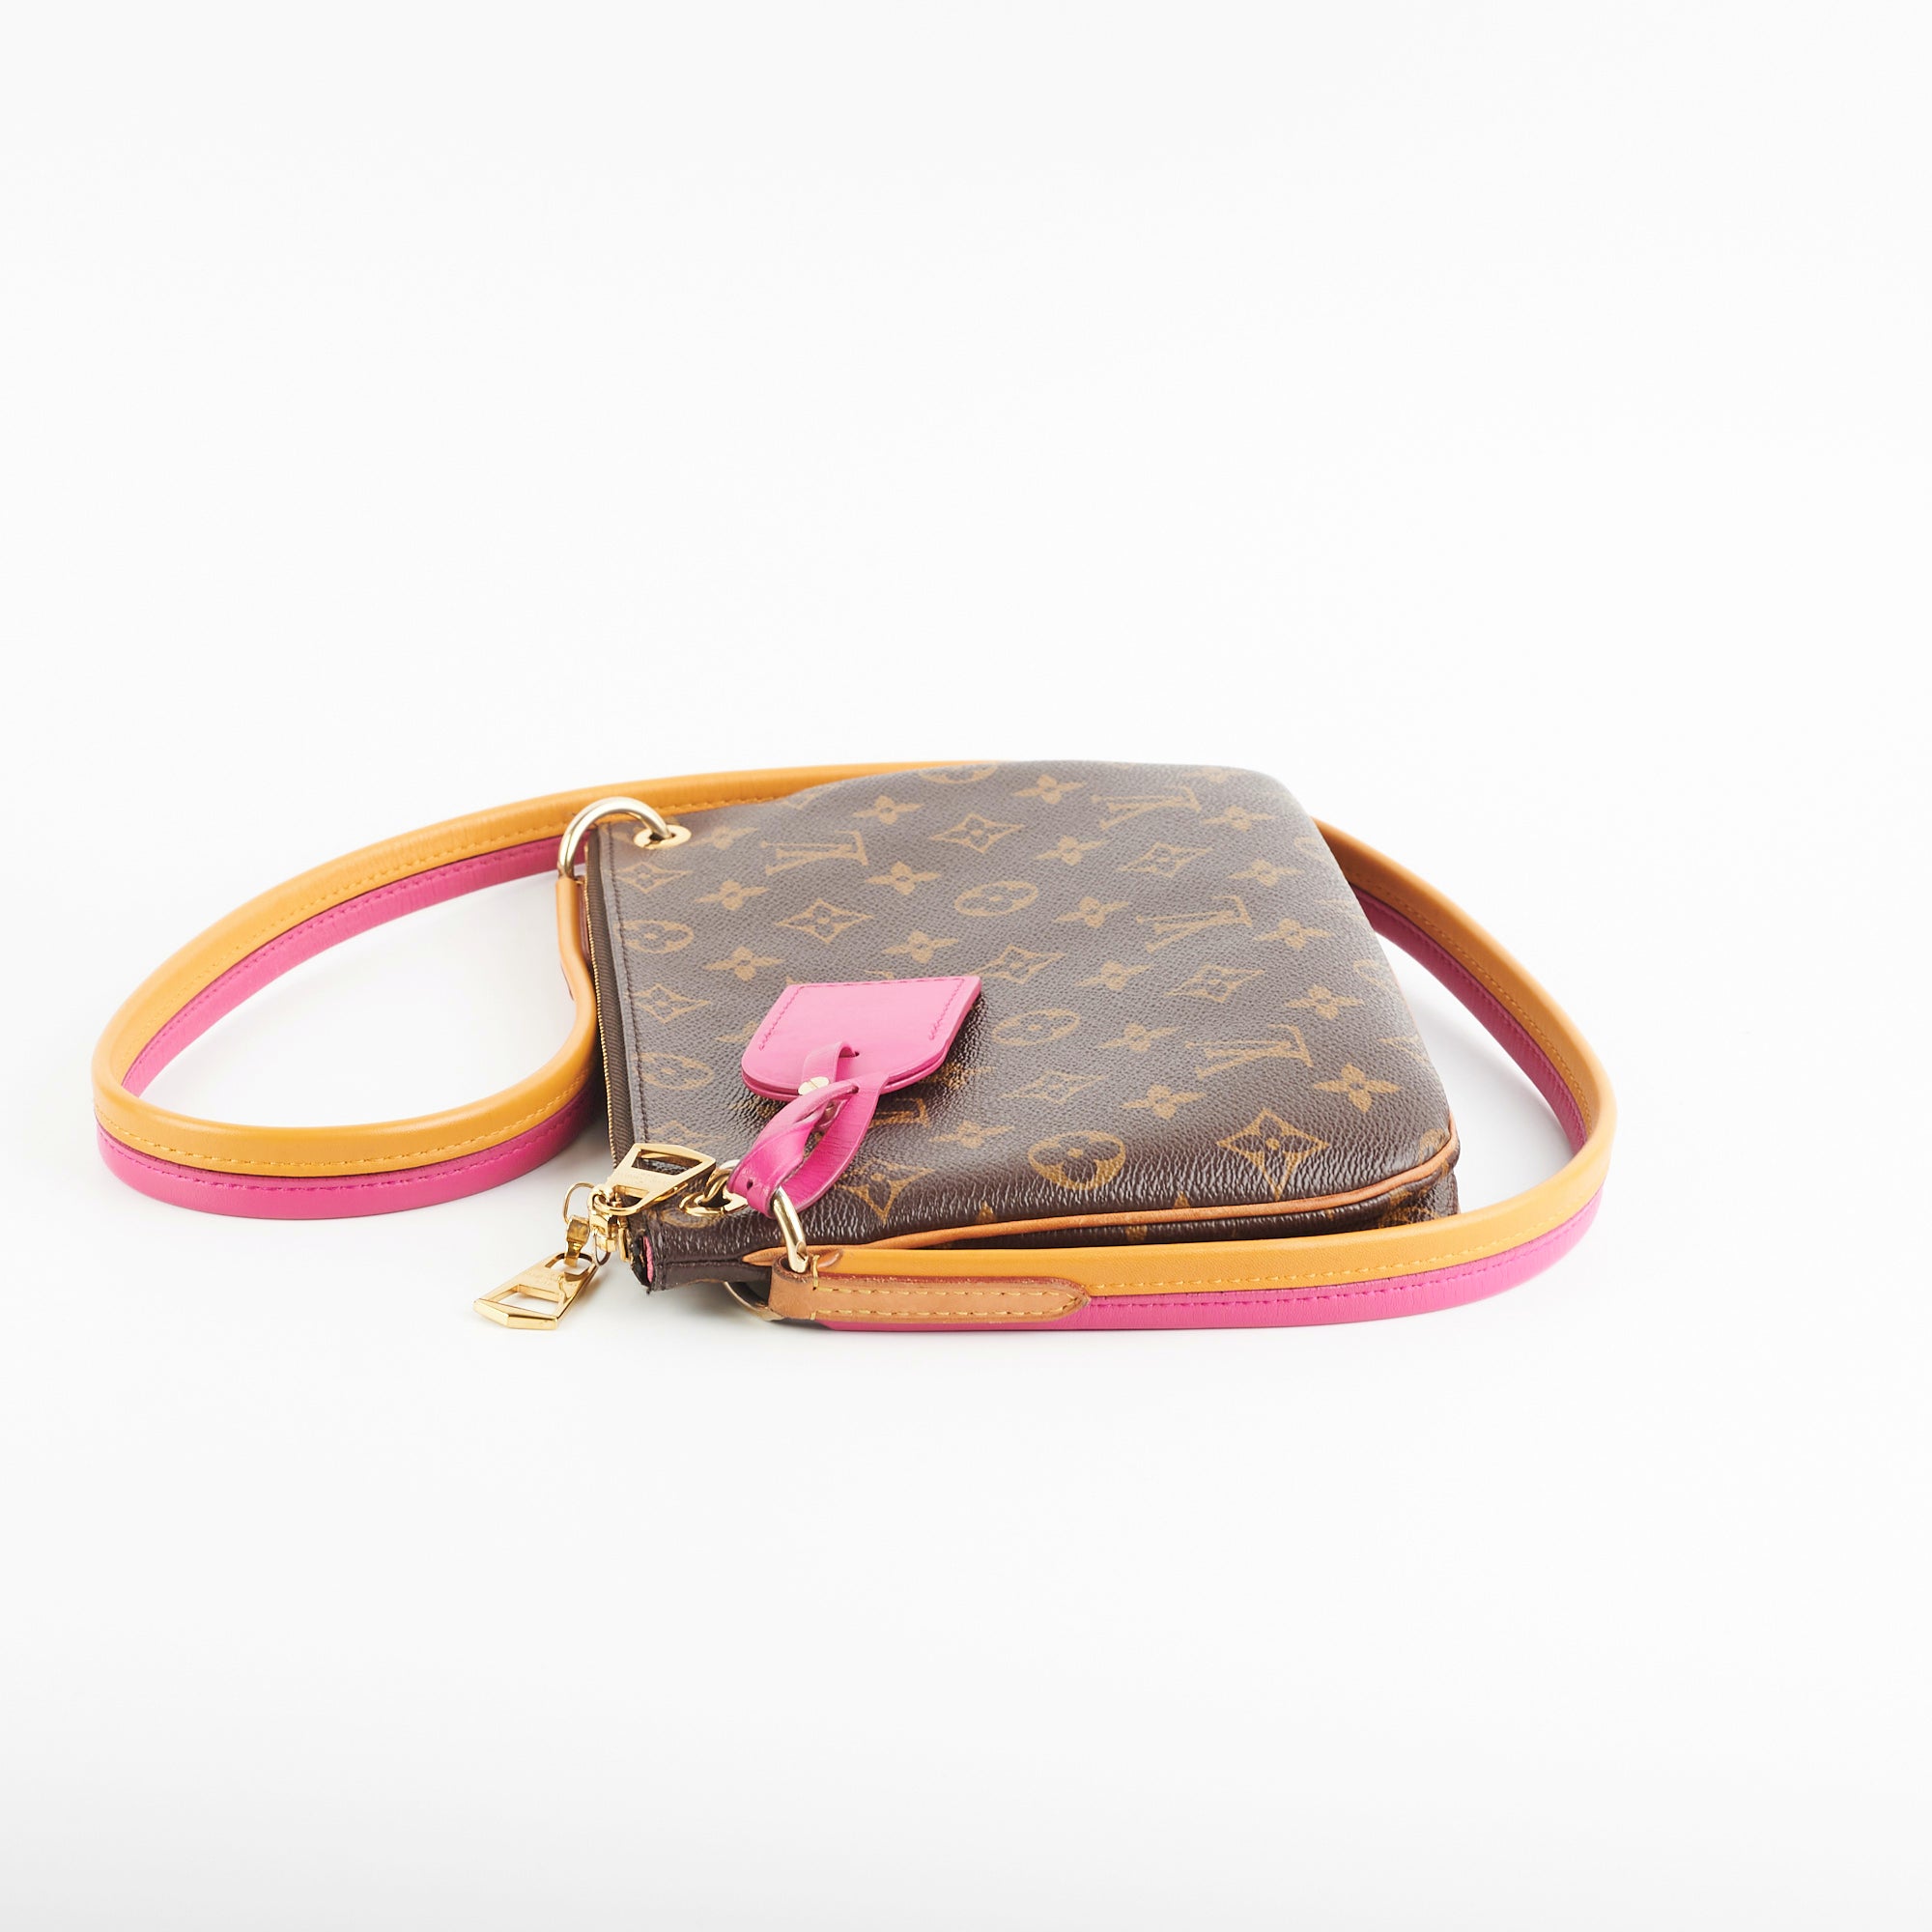 LOUIS VUITTON M44053 Loretta Shoulder Bag Brown/pink/yellow